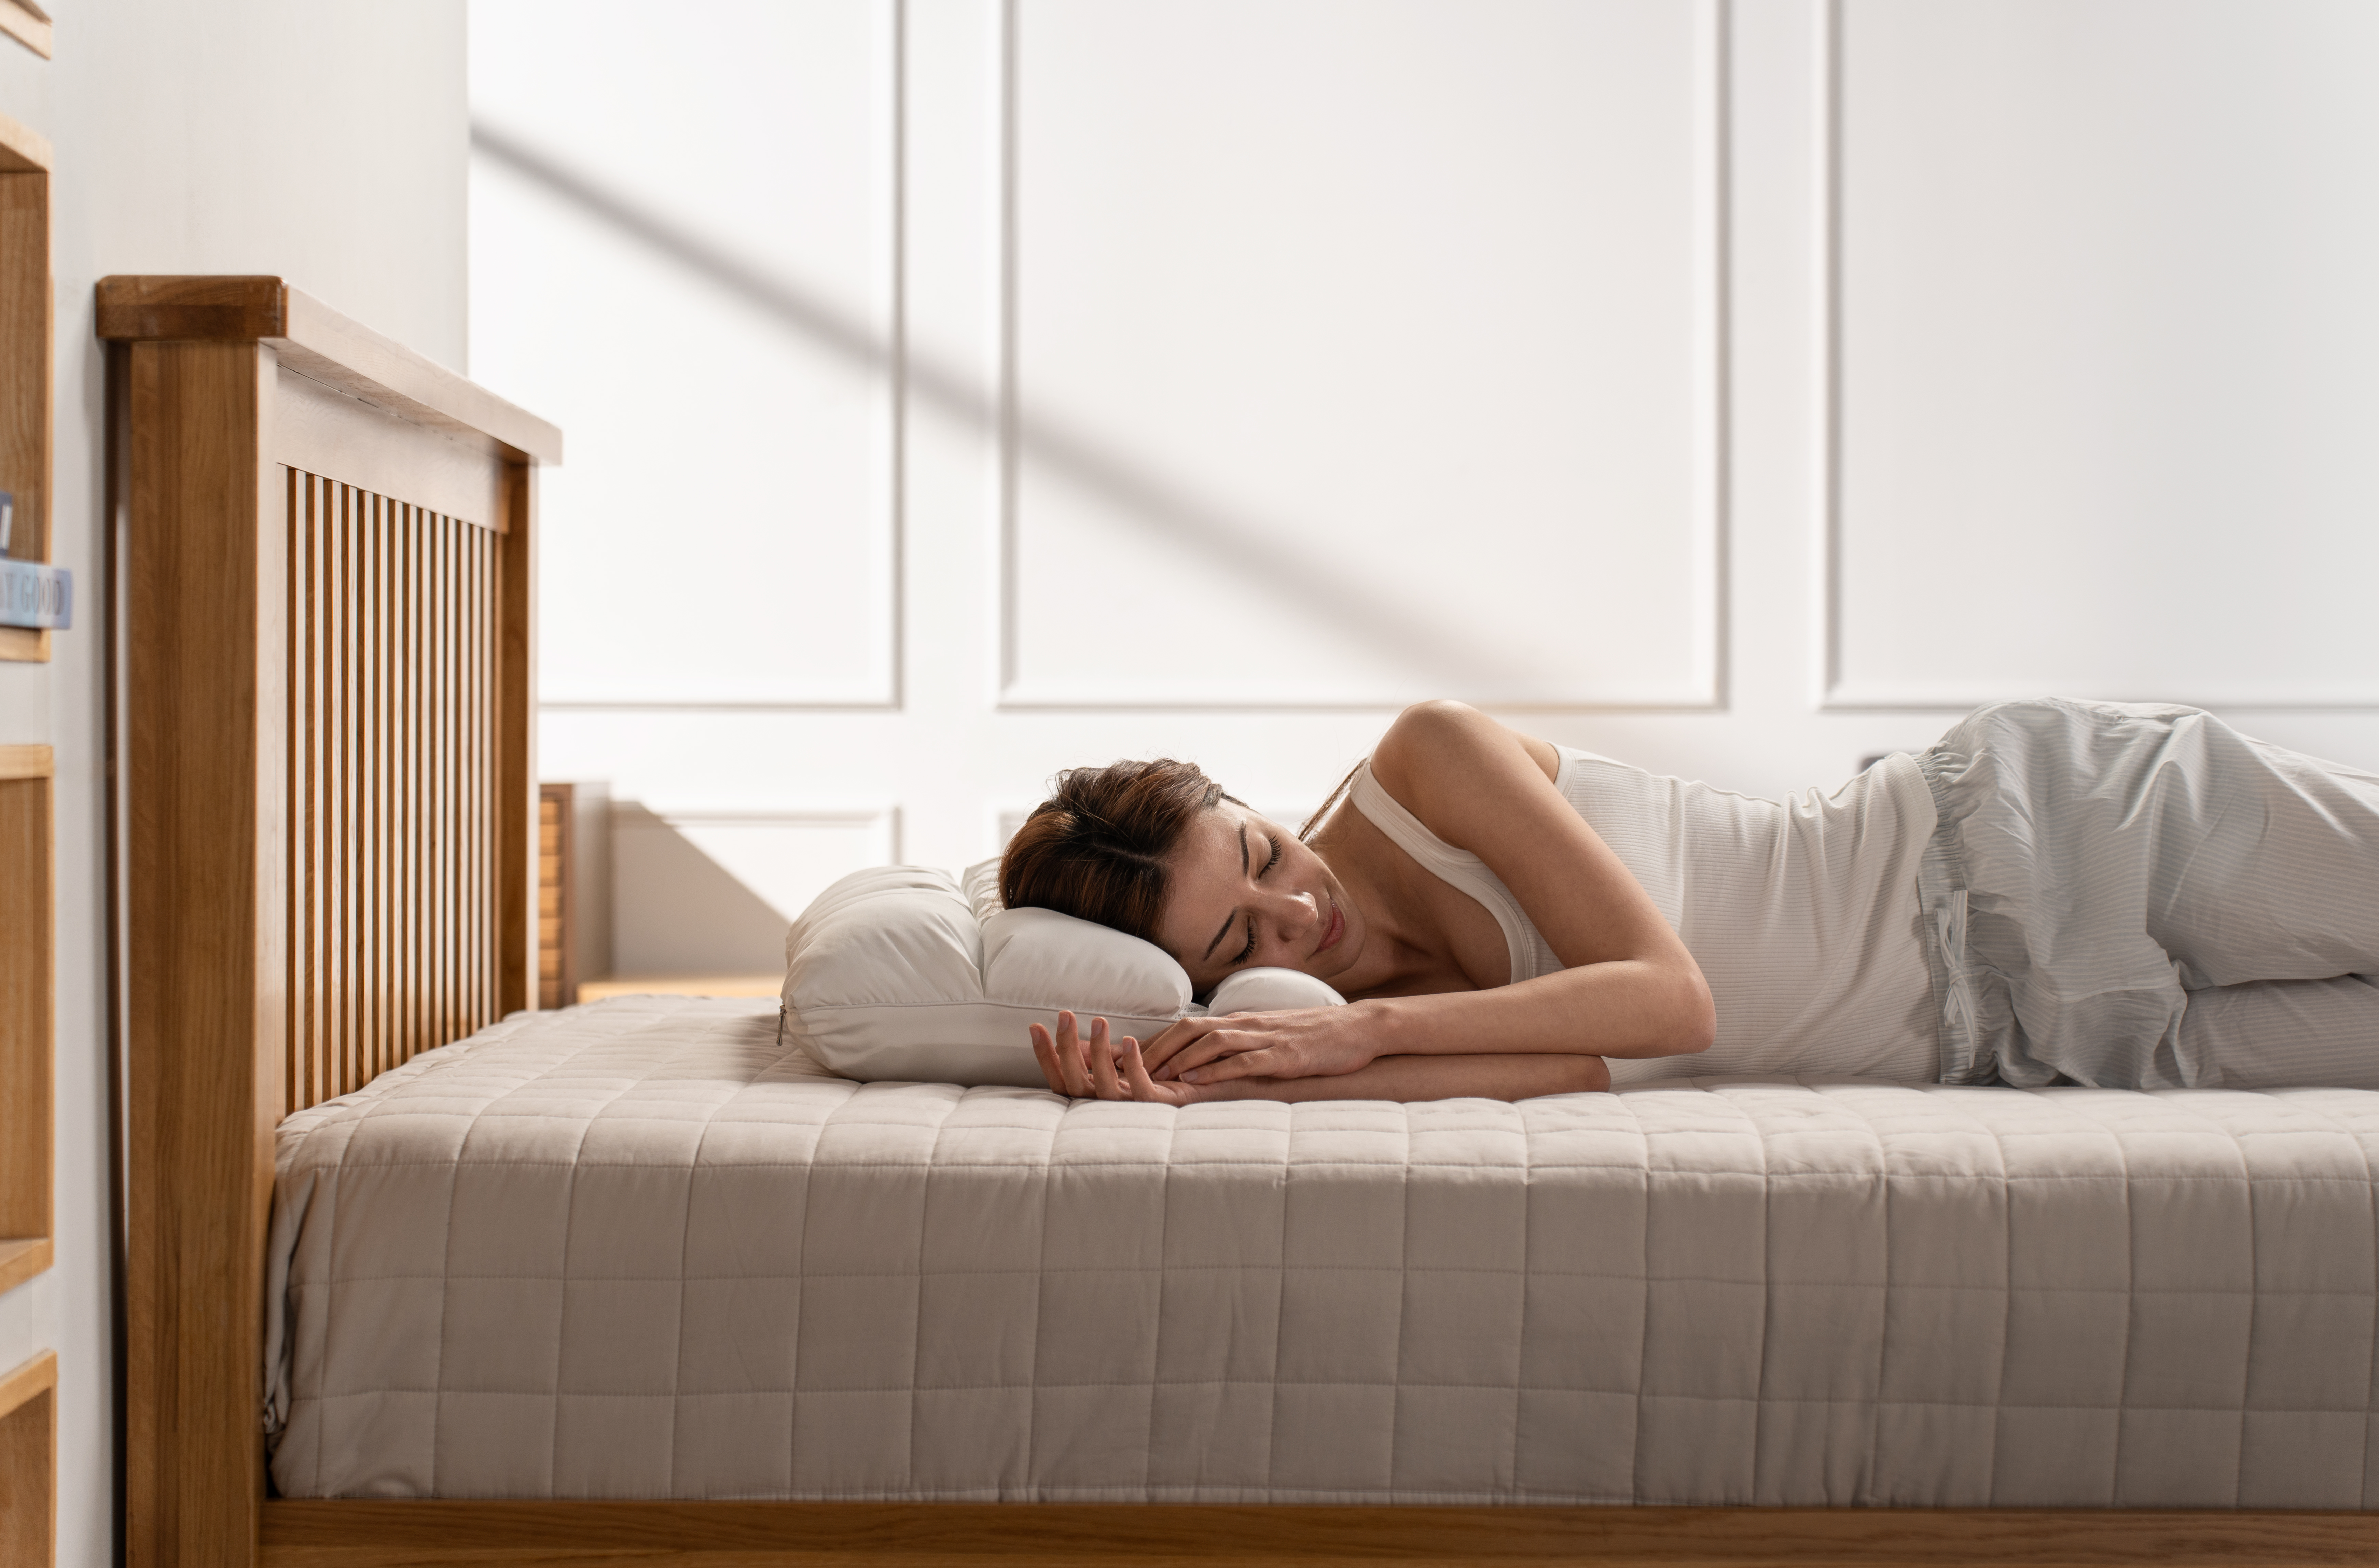 SURURU Pillow P17: Redefining Comfort, Launching Soon on